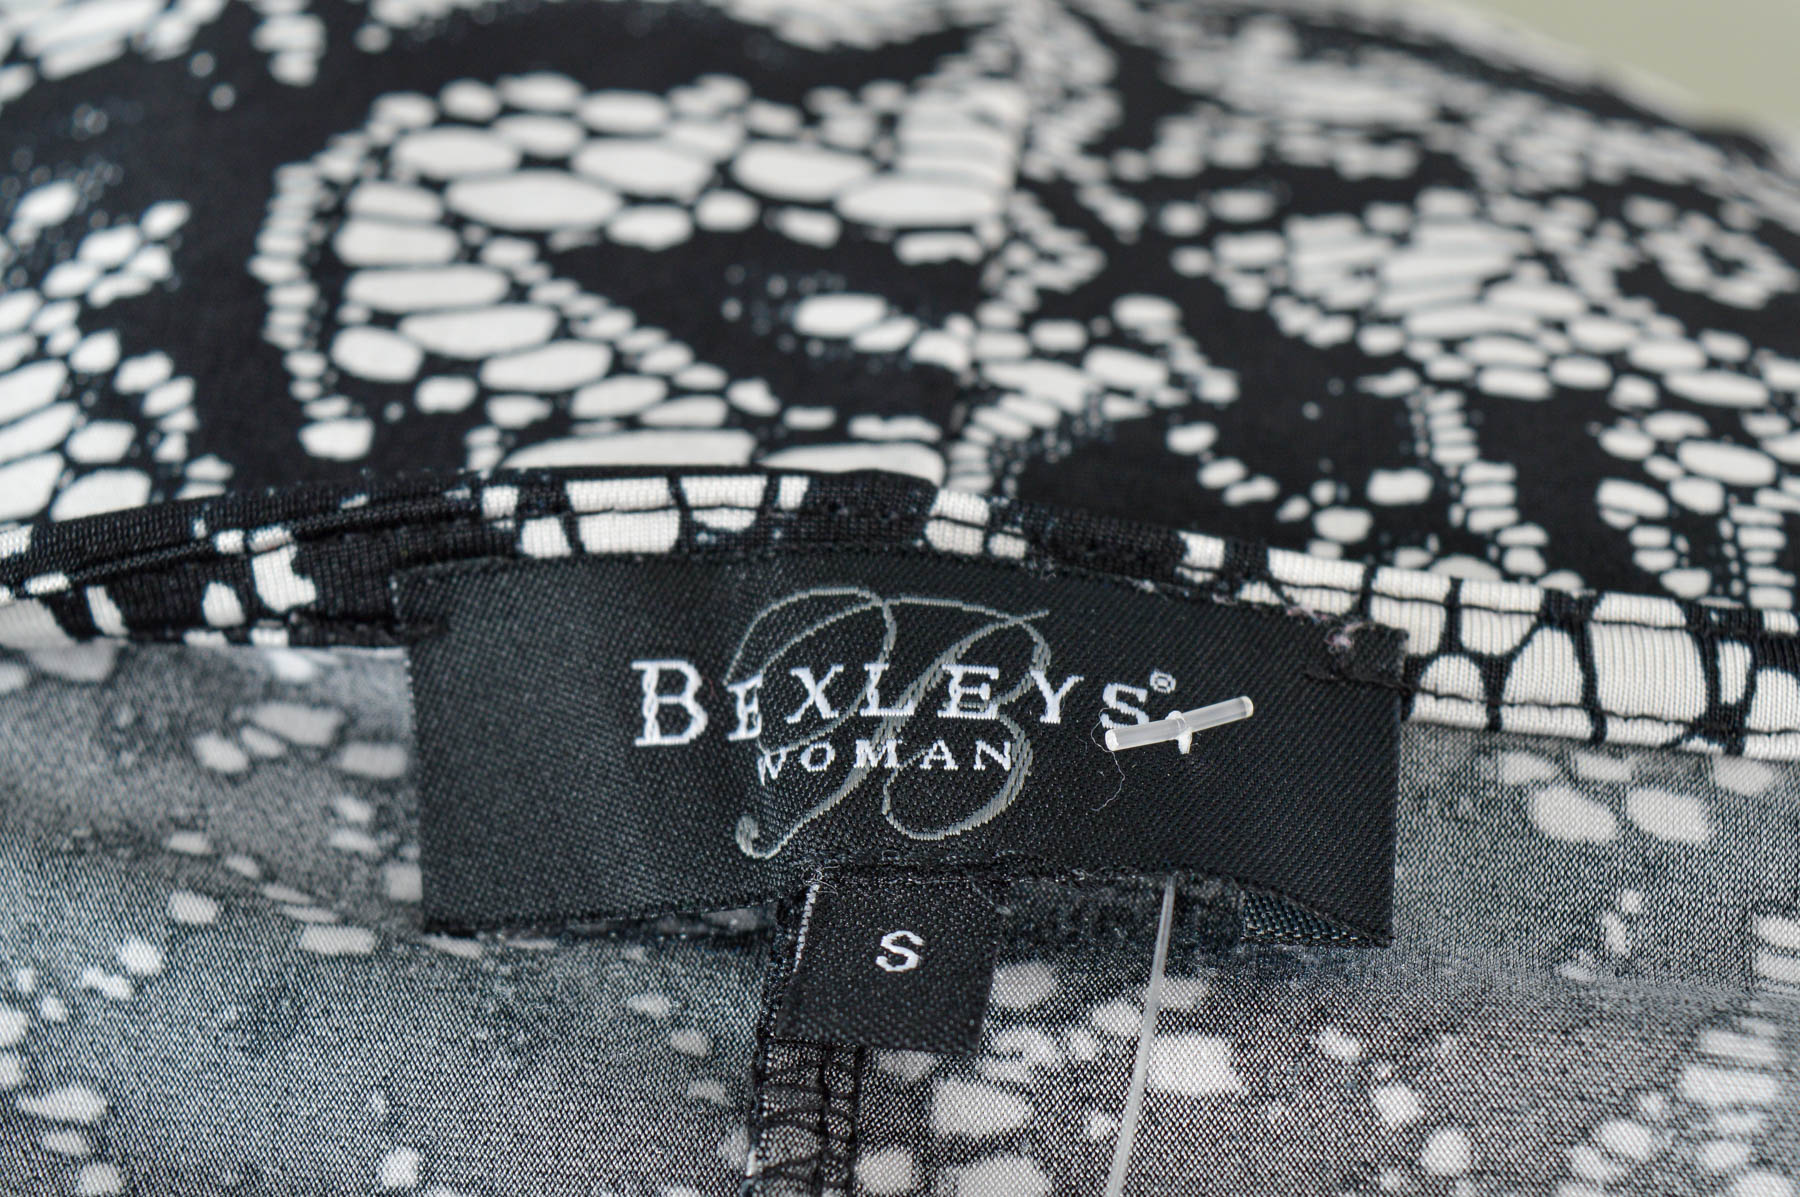 Дамска блуза - Bexleys - 2